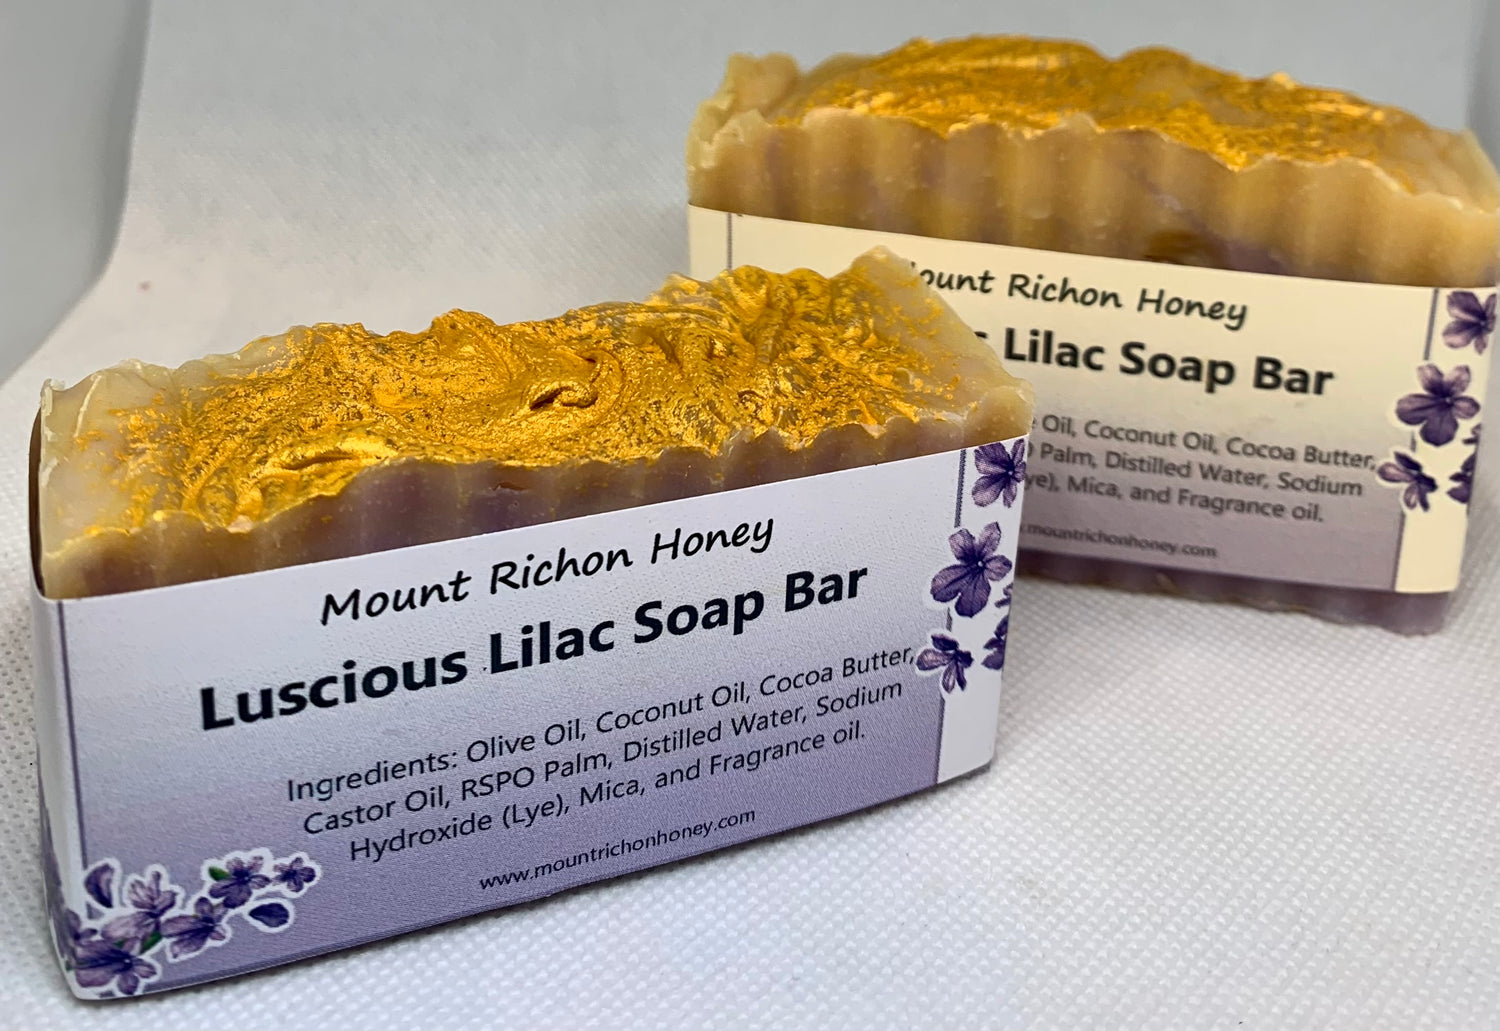 Luscious Lilac Soap Bar